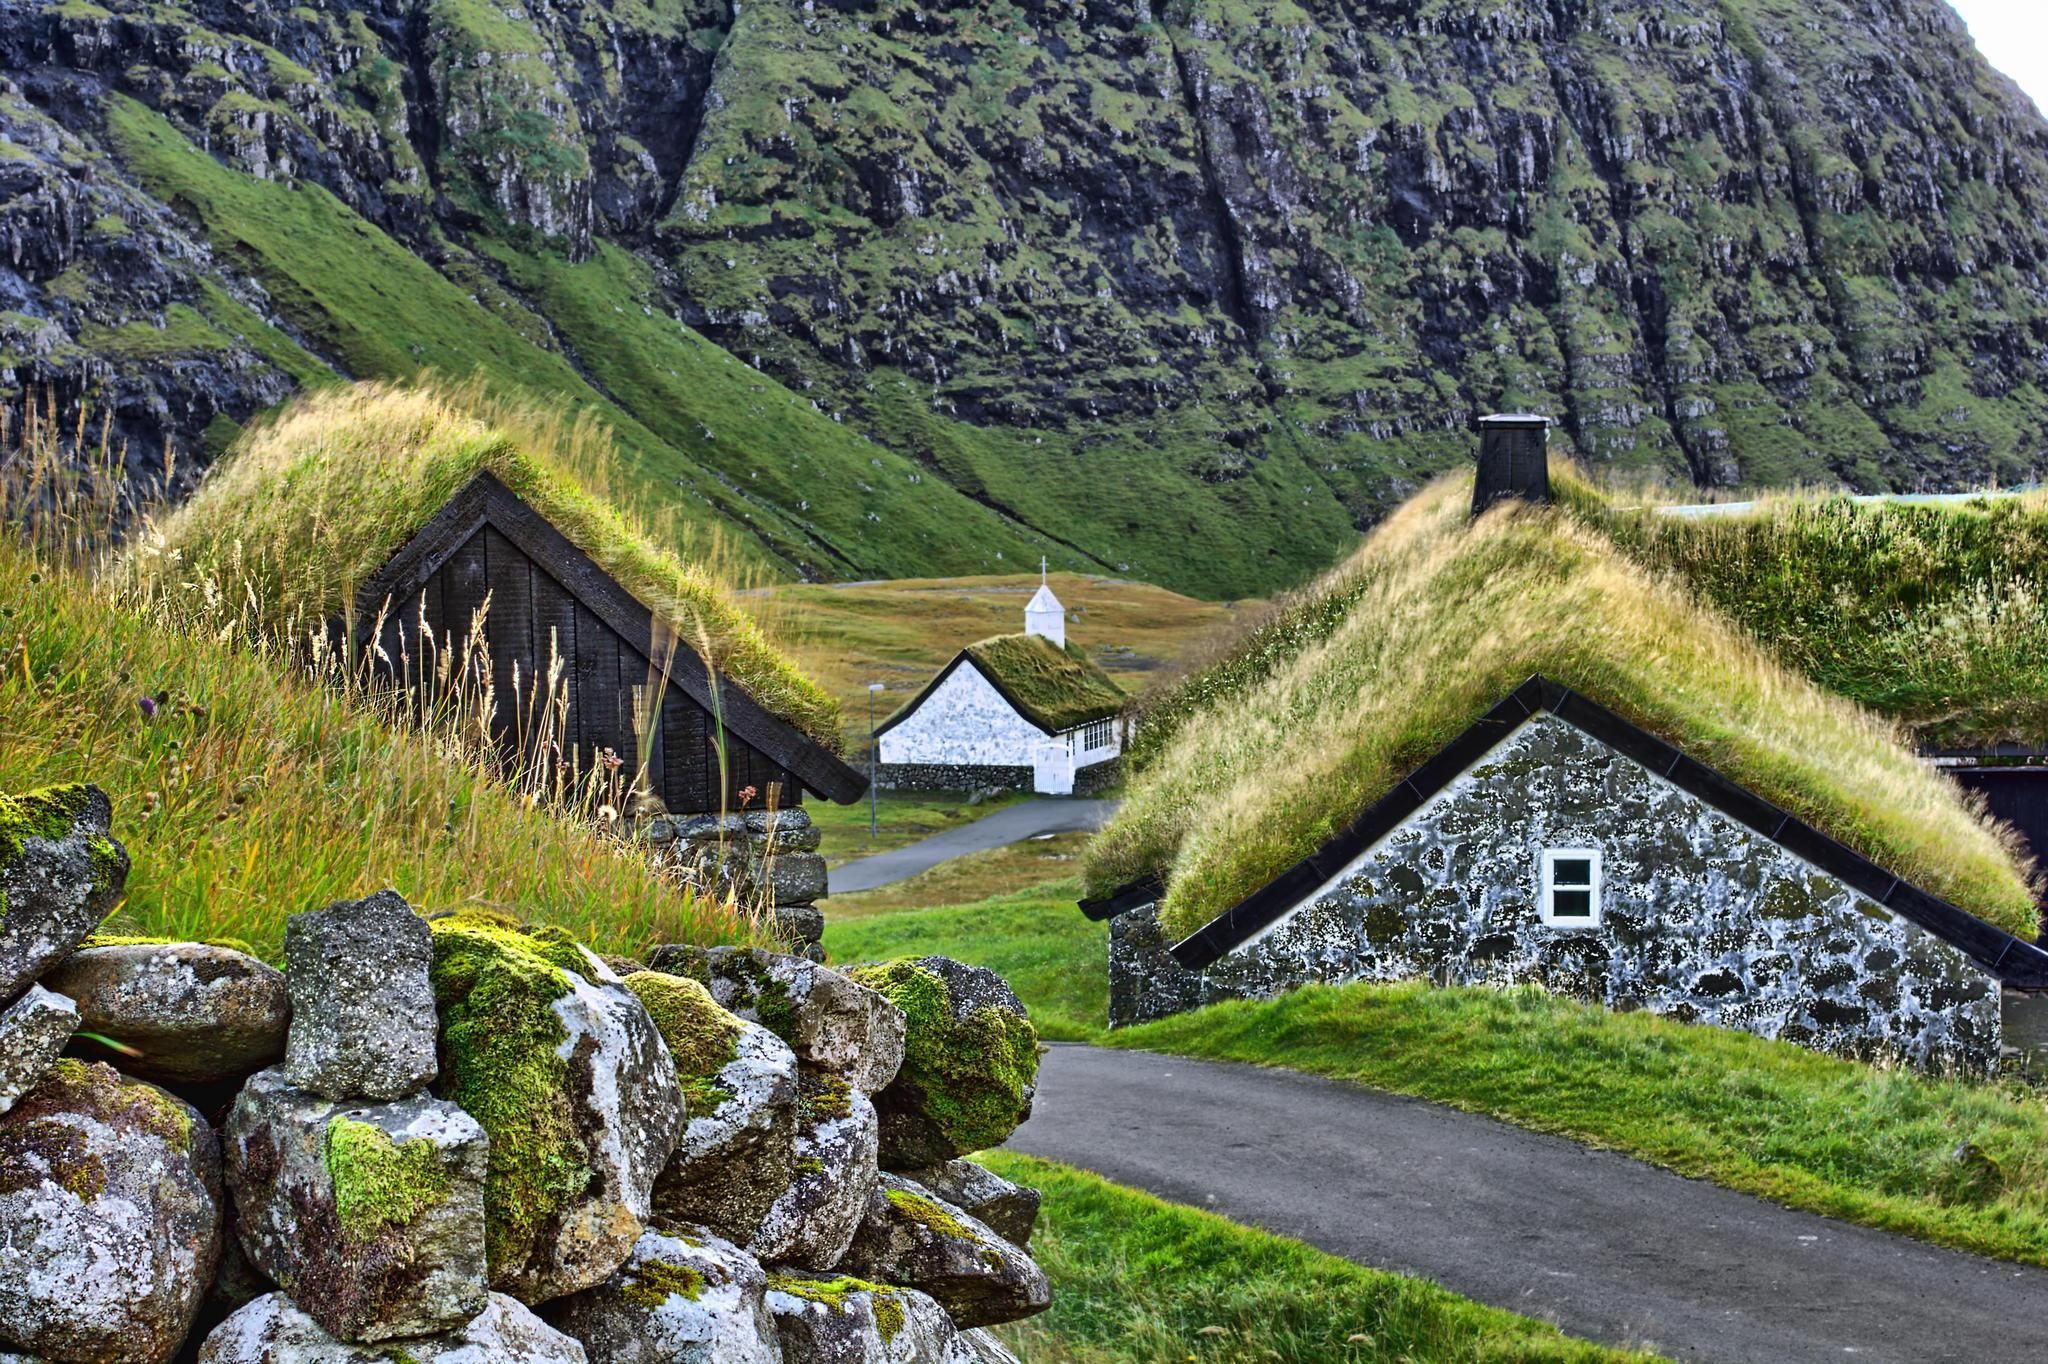 Green Roof Houses Of Faroe Island - Saksun , HD Wallpaper & Backgrounds